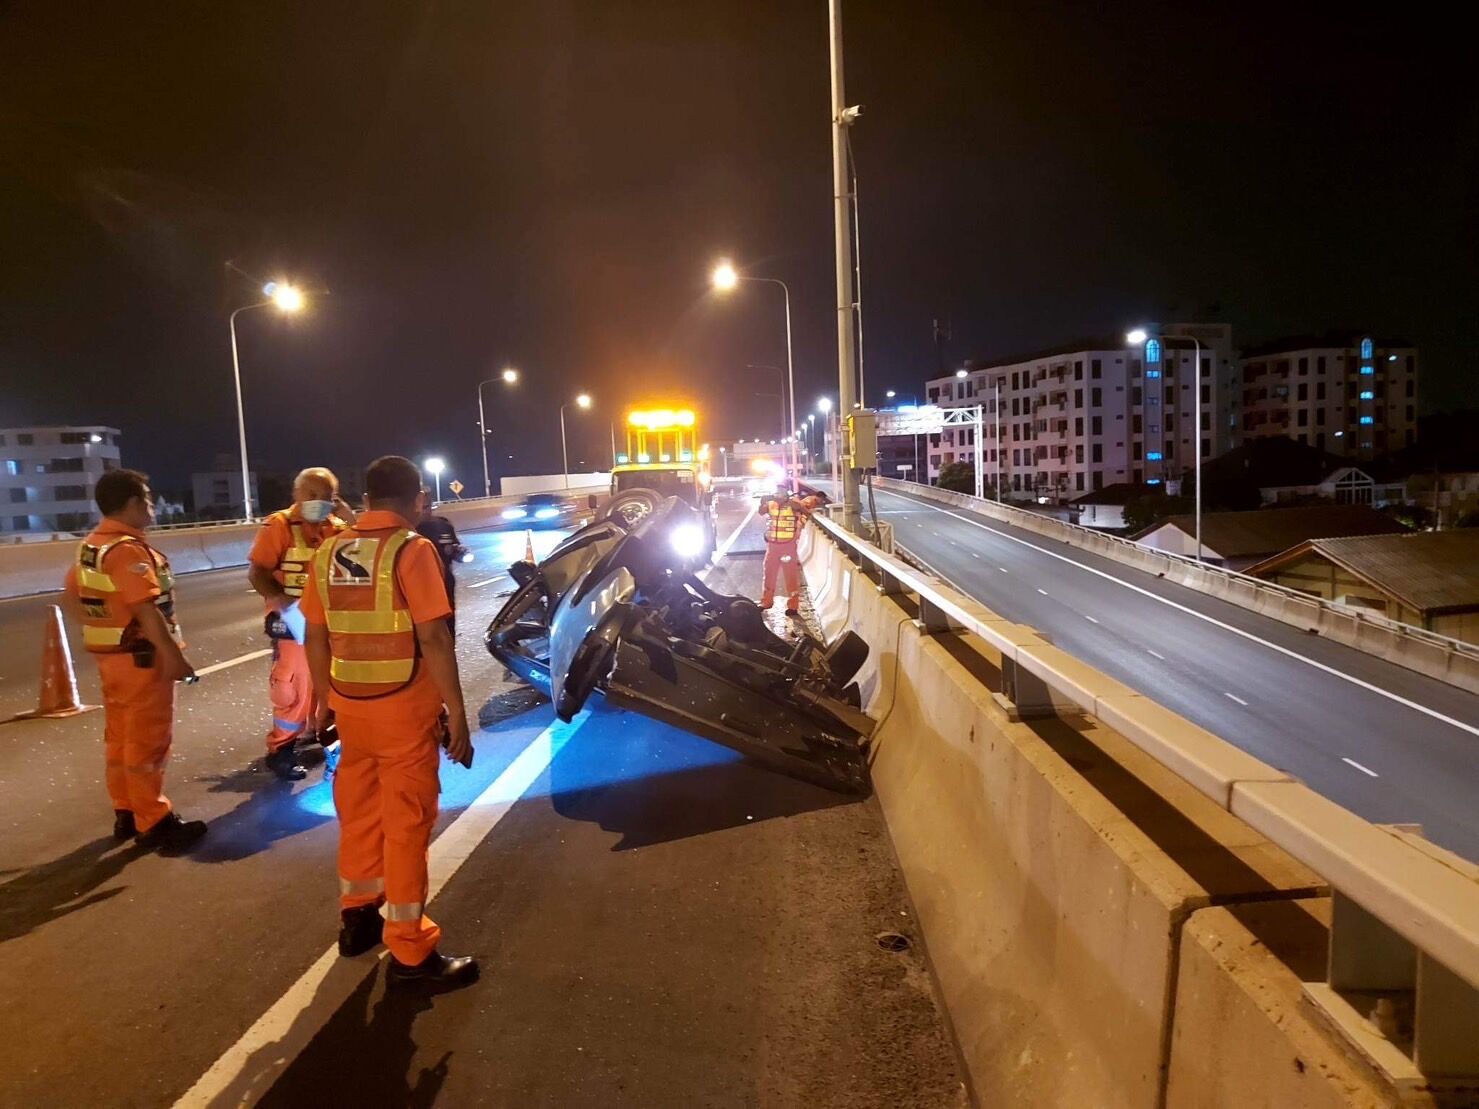 Speeding pickup truck flips on Si Rat expressway – driver dies in collision